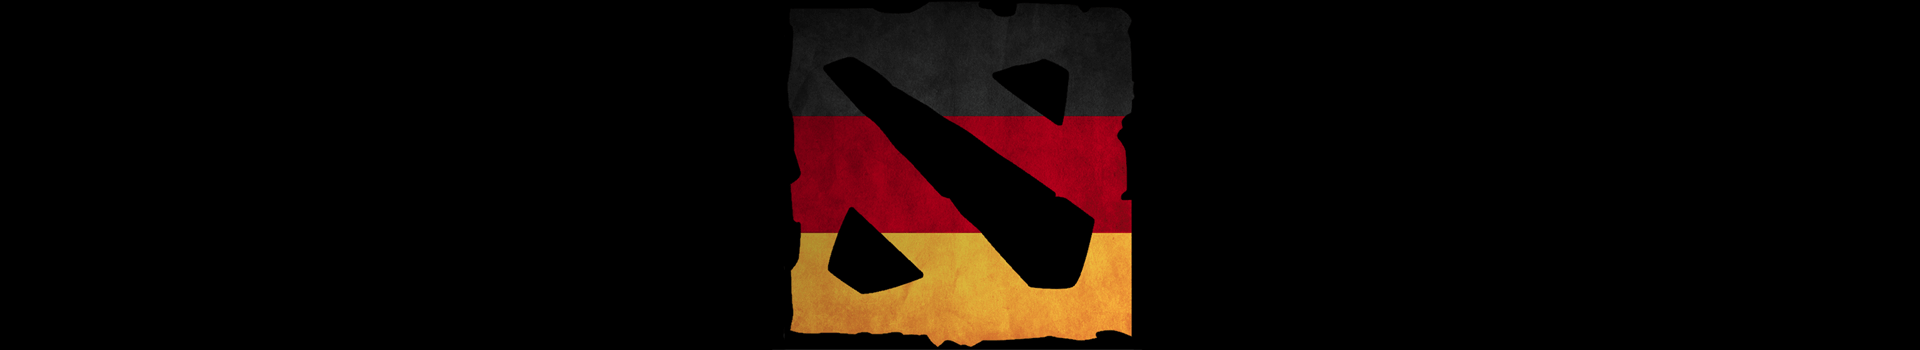 German Dota League